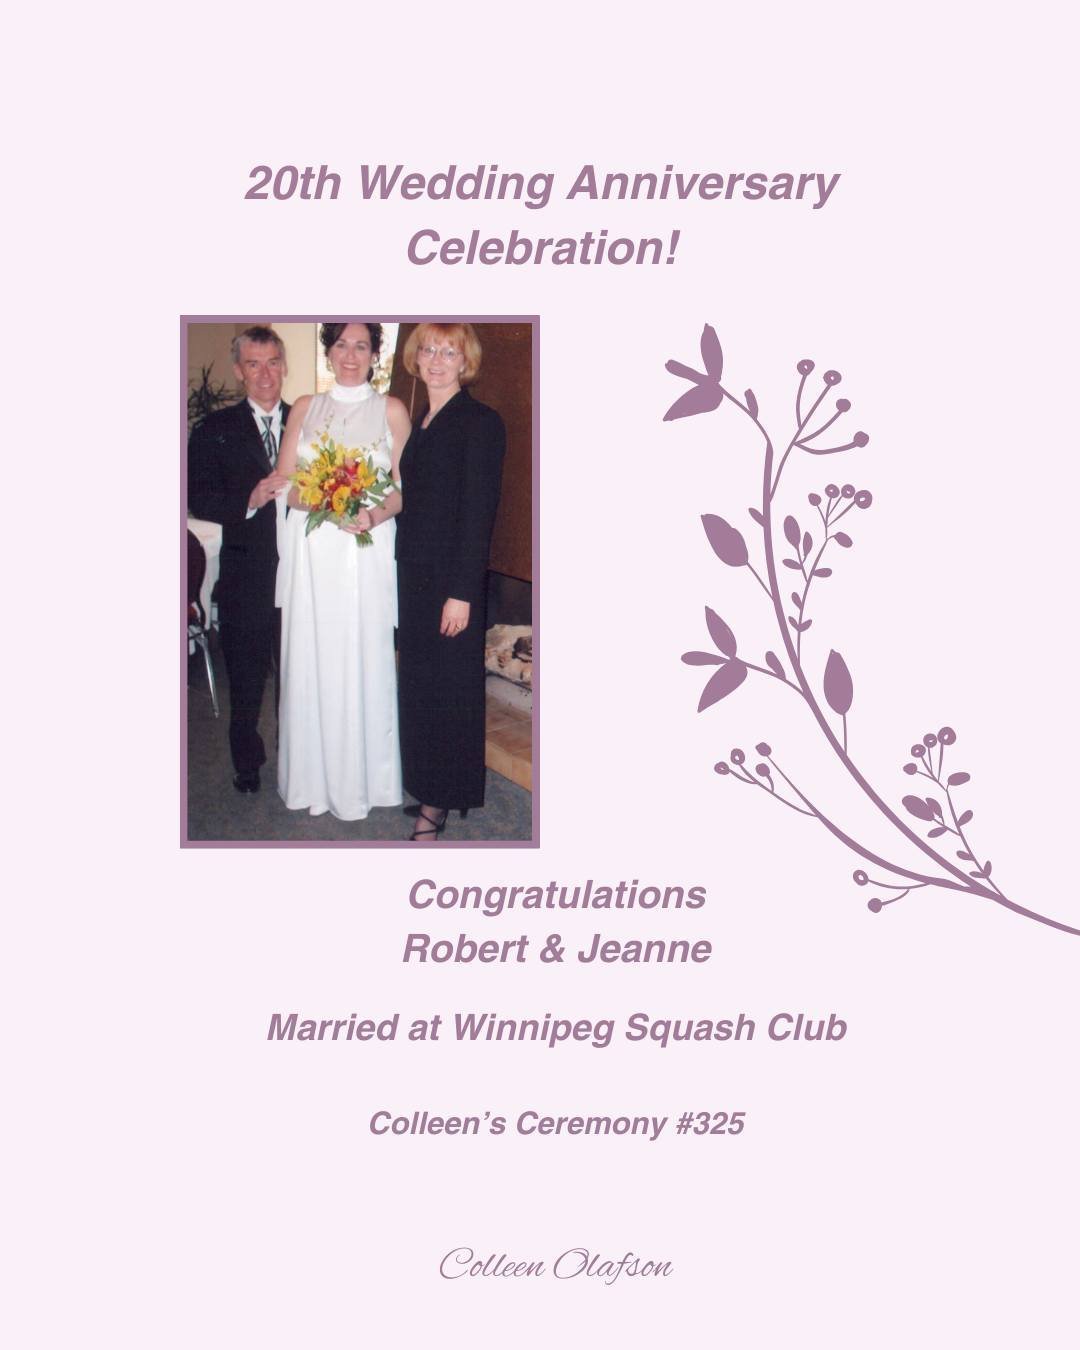 Happy 20th Anniversary Jeanne &amp; Robert! 💞⁠
Married at Winnipeg Squash Club.